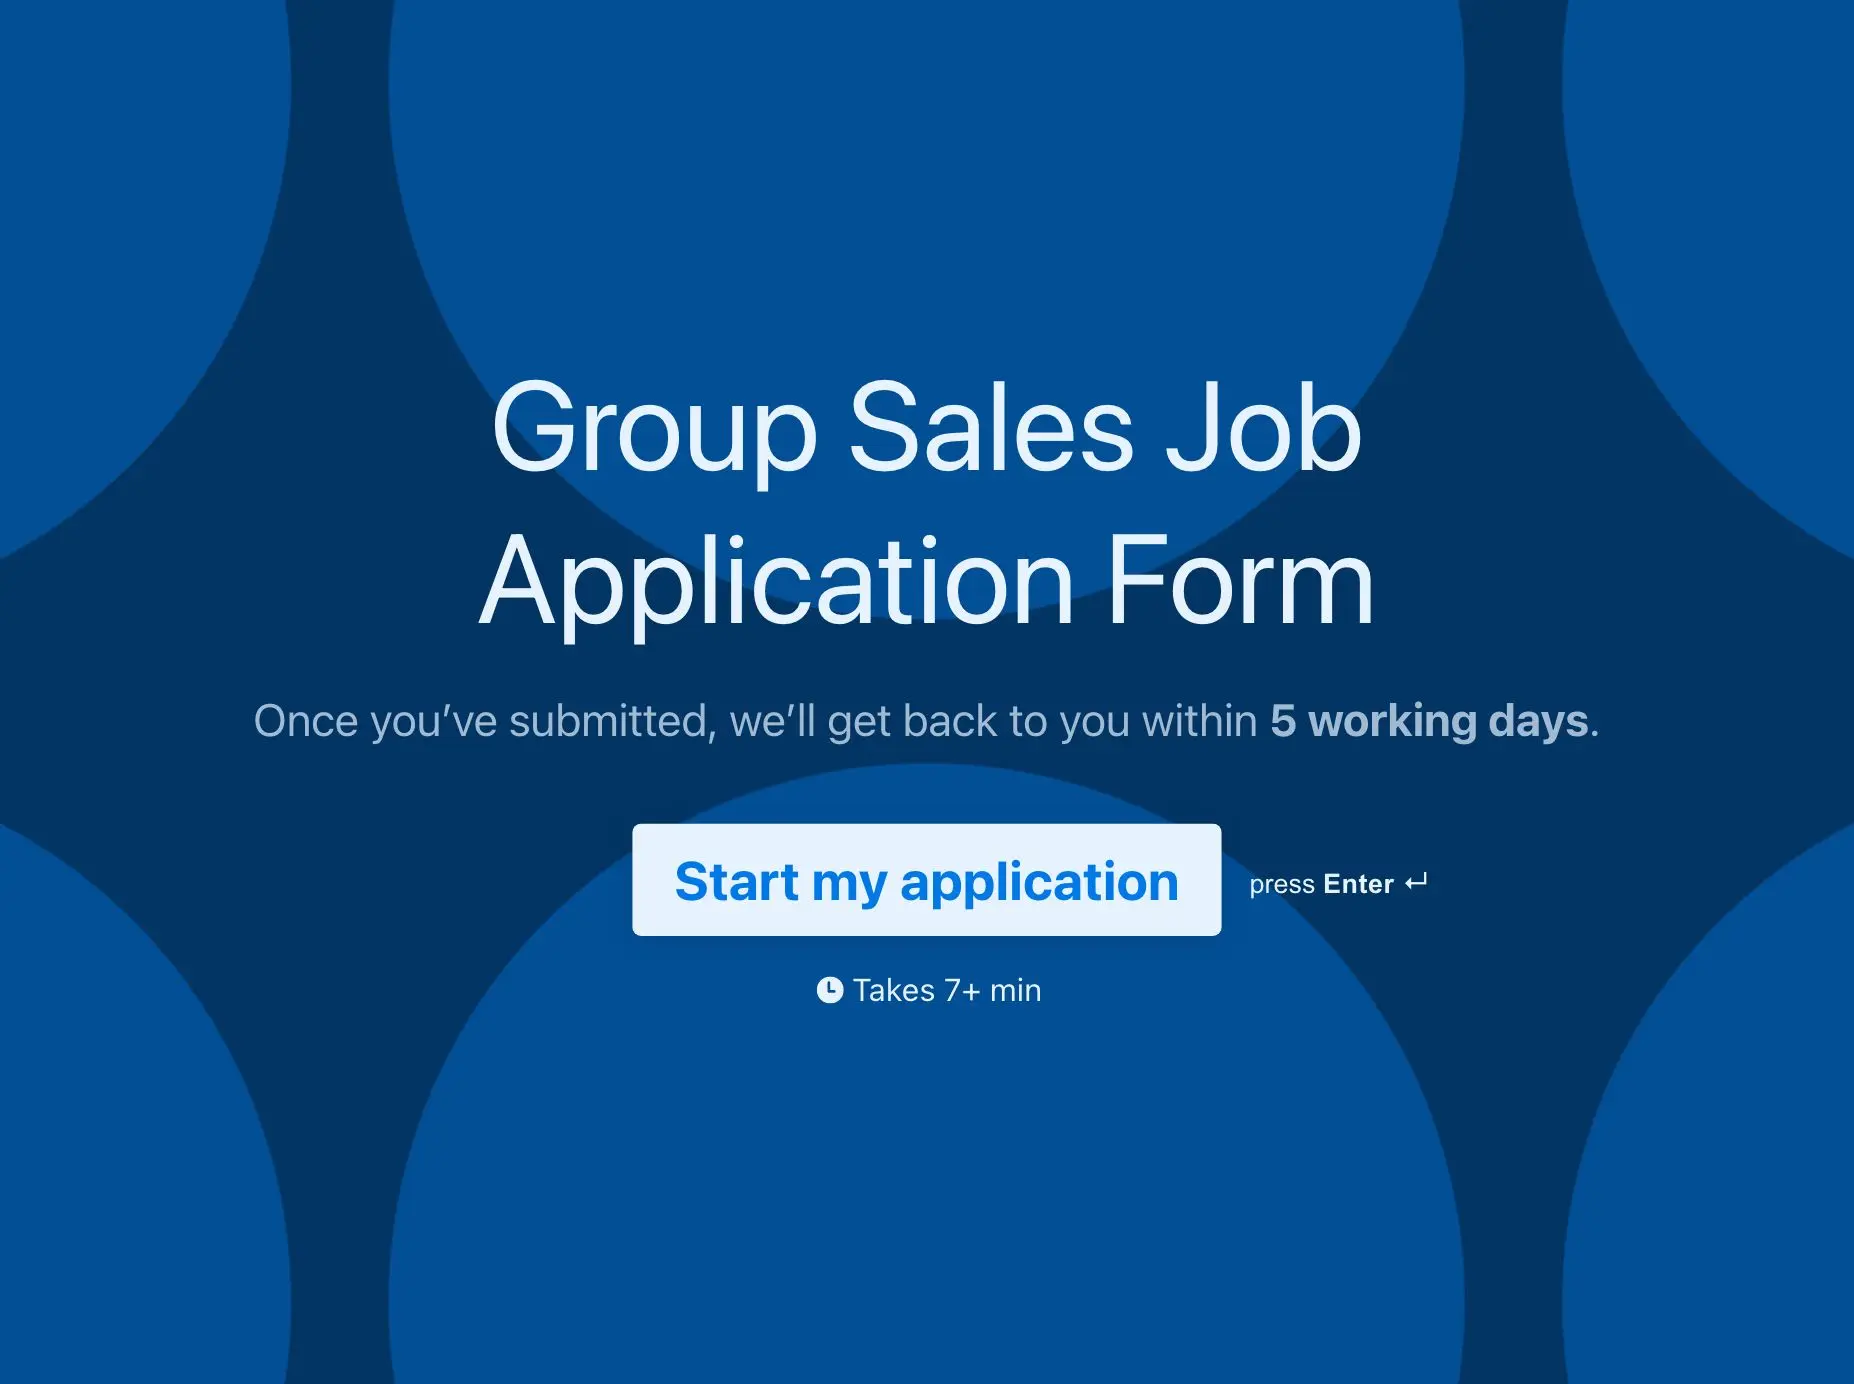 Group Sales Job Application Form Template Hero